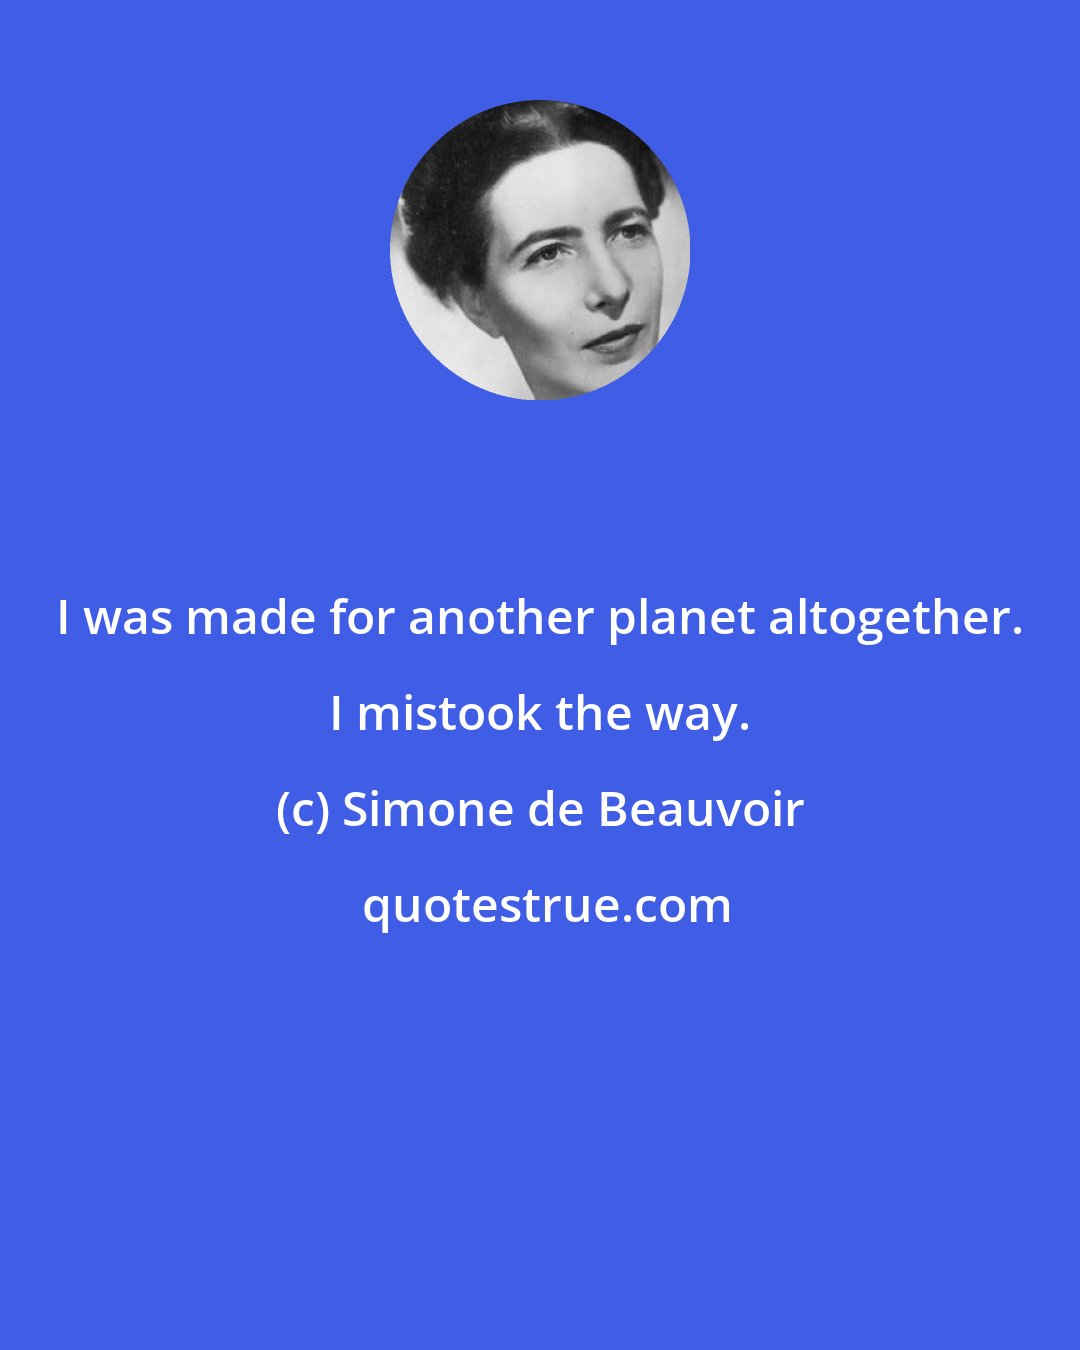 Simone de Beauvoir: I was made for another planet altogether. I mistook the way.